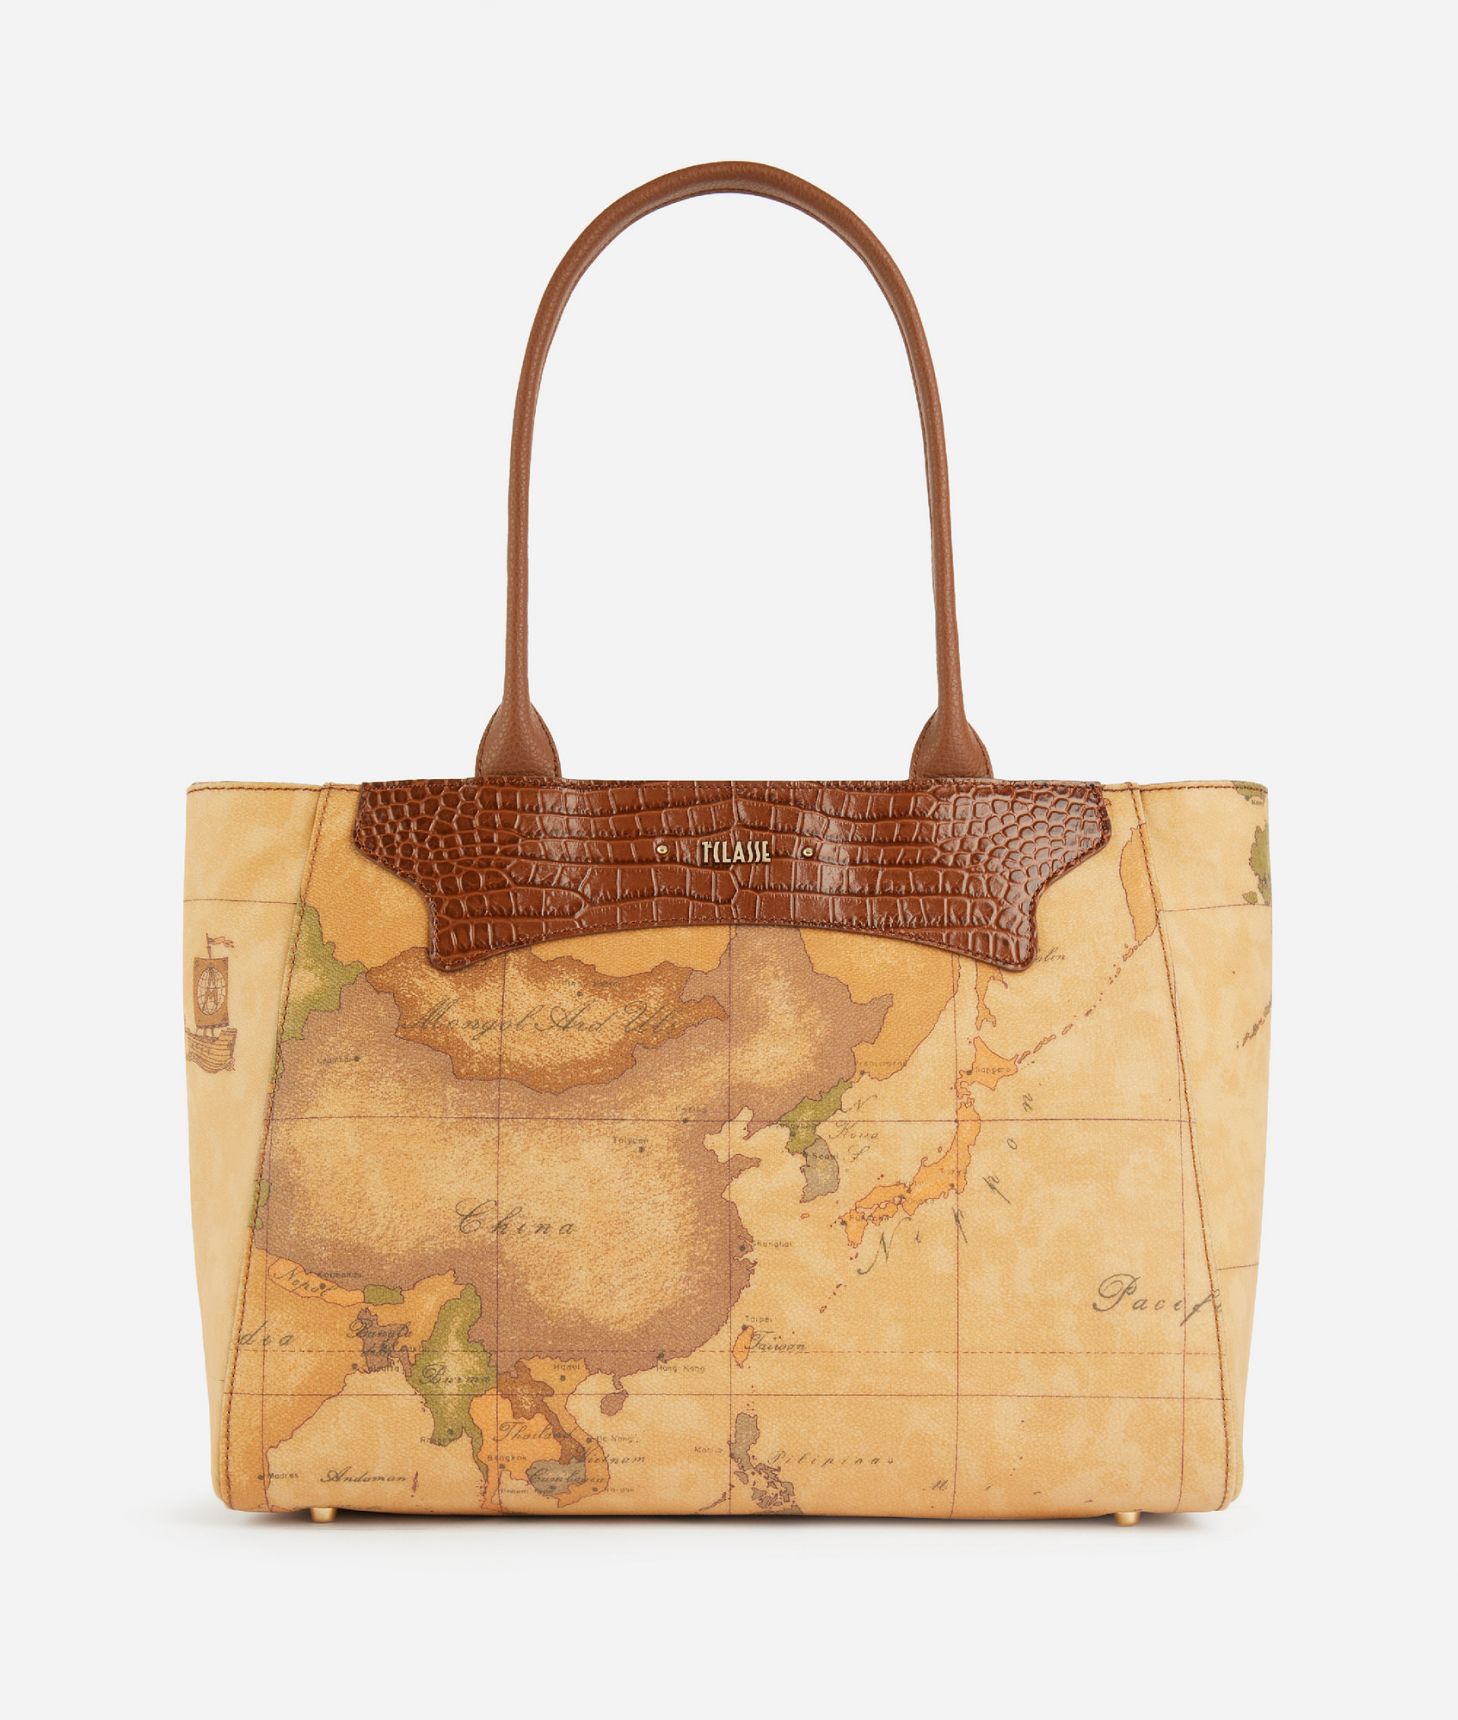 Geo Exotic borsa shopper bag Chestnut,front